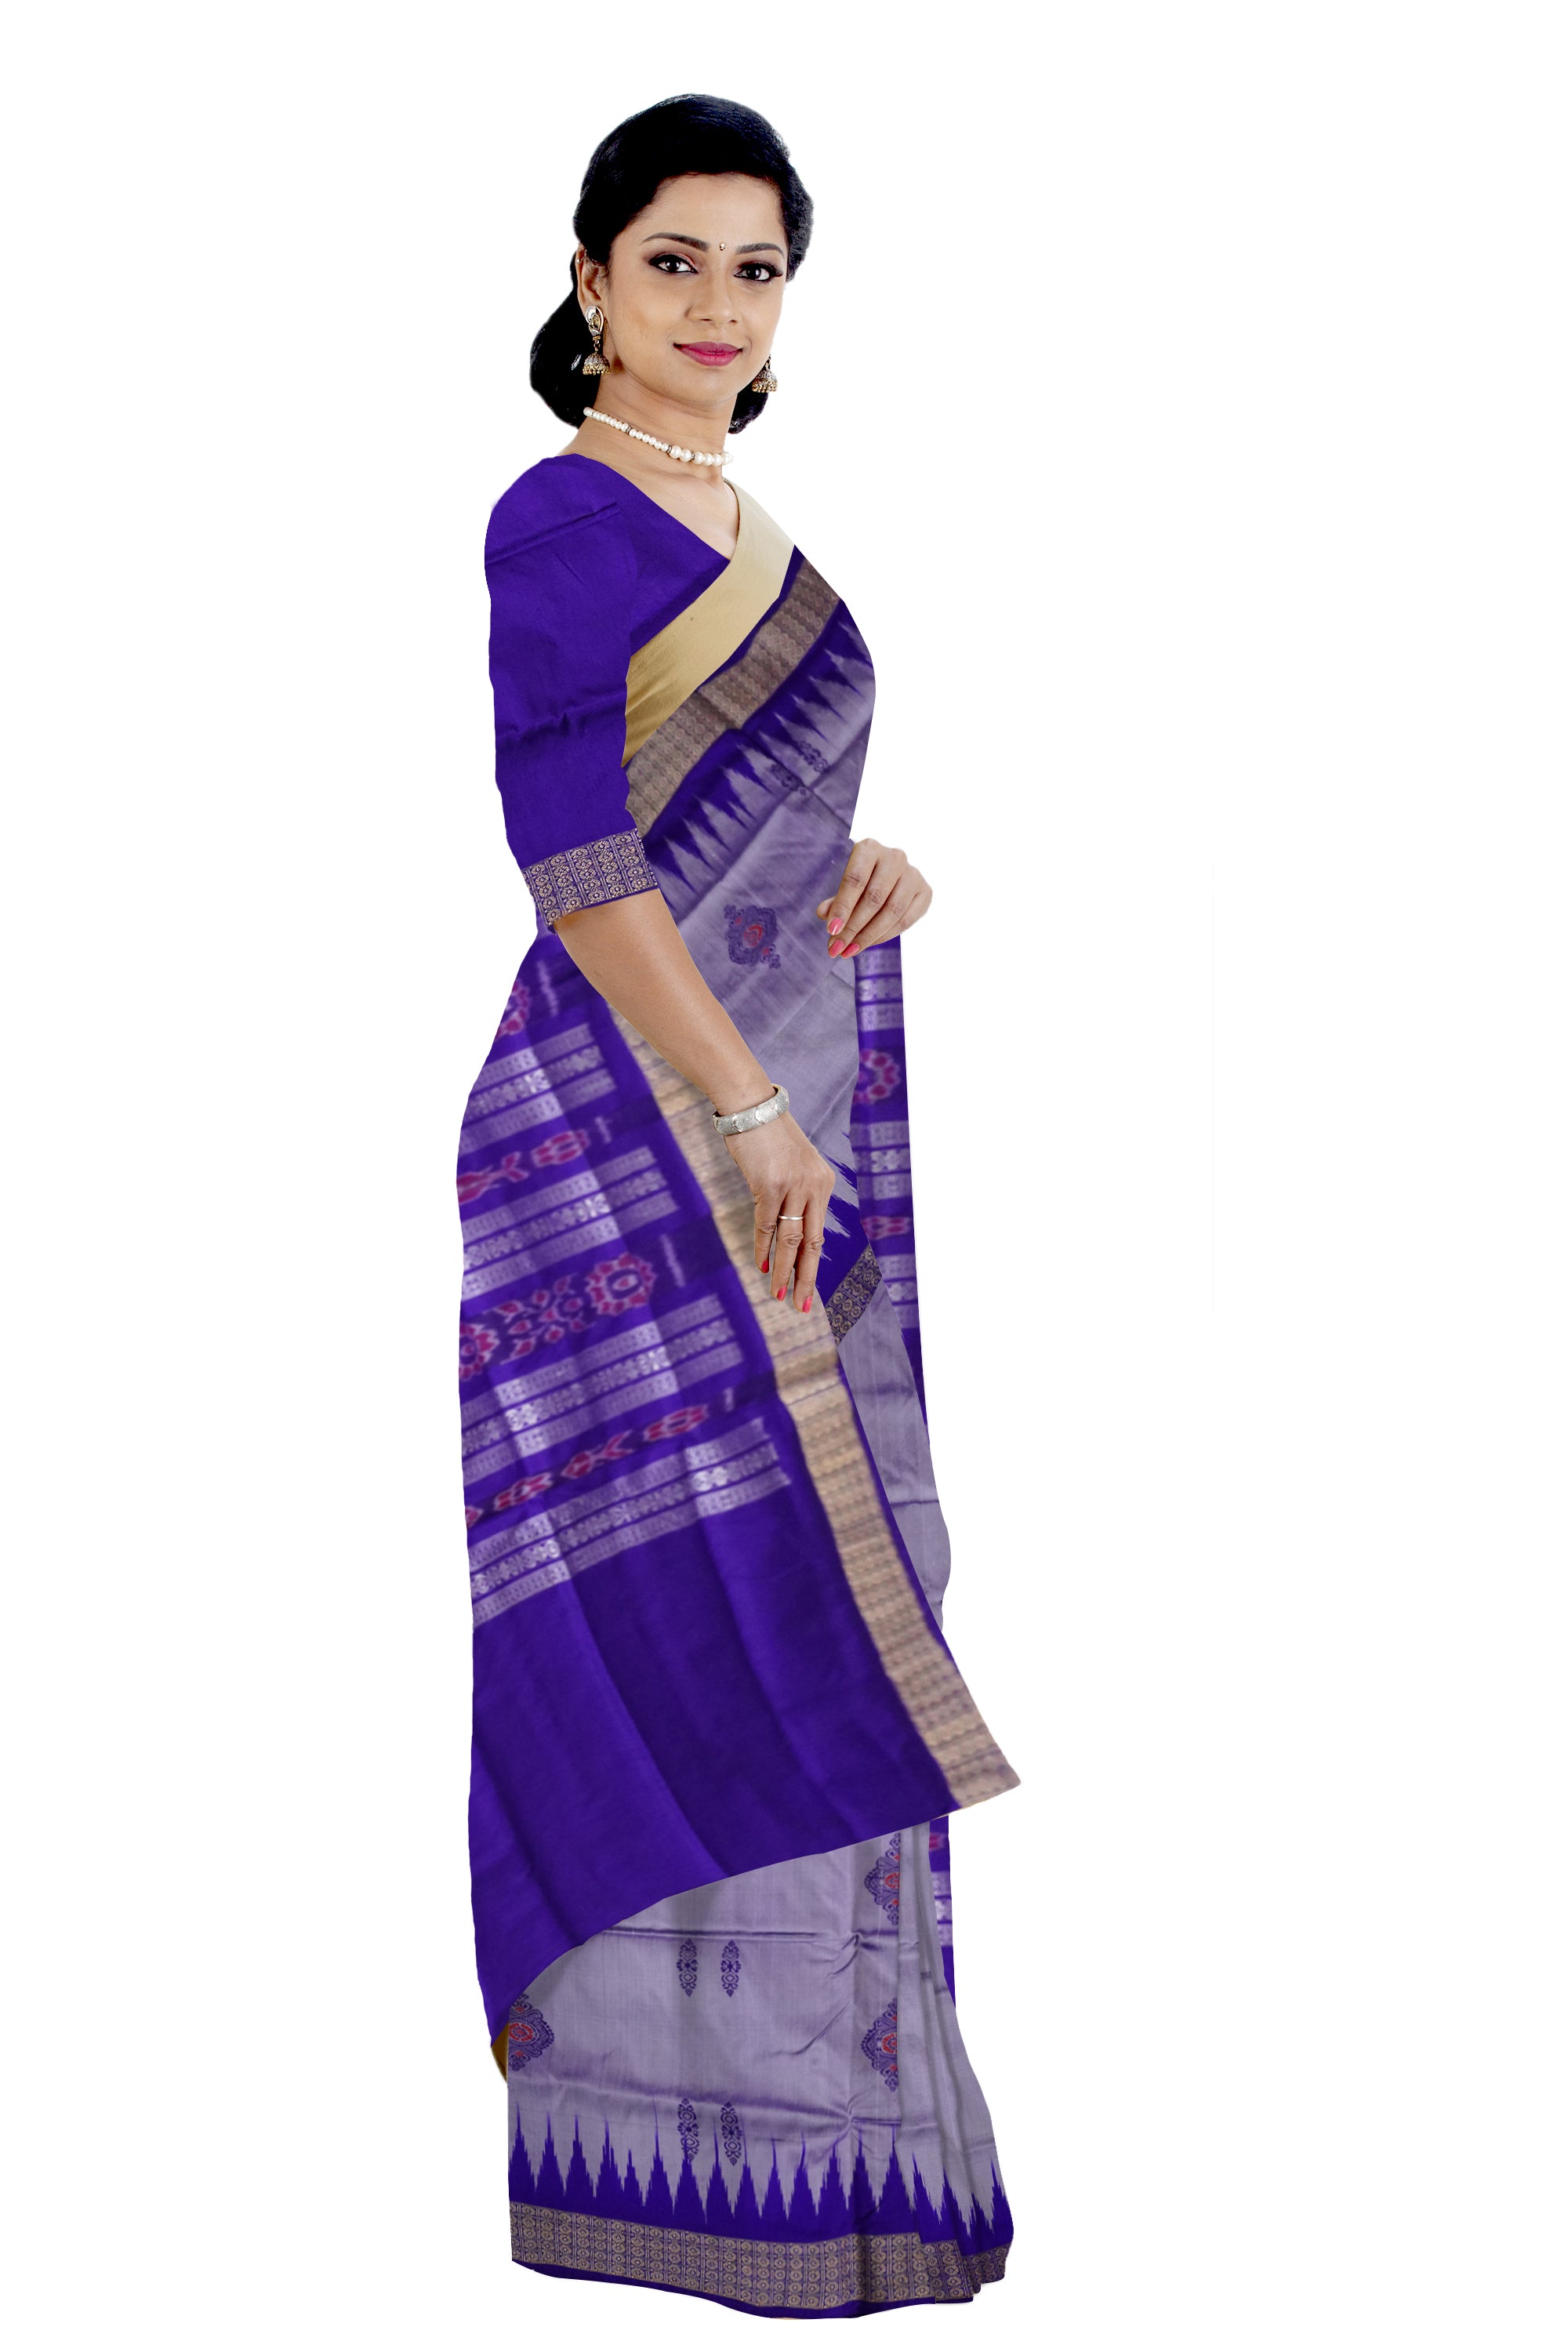 Silver and Purple Padma pata saree, versatile for all occasions. - Koshali Arts & Crafts Enterprise